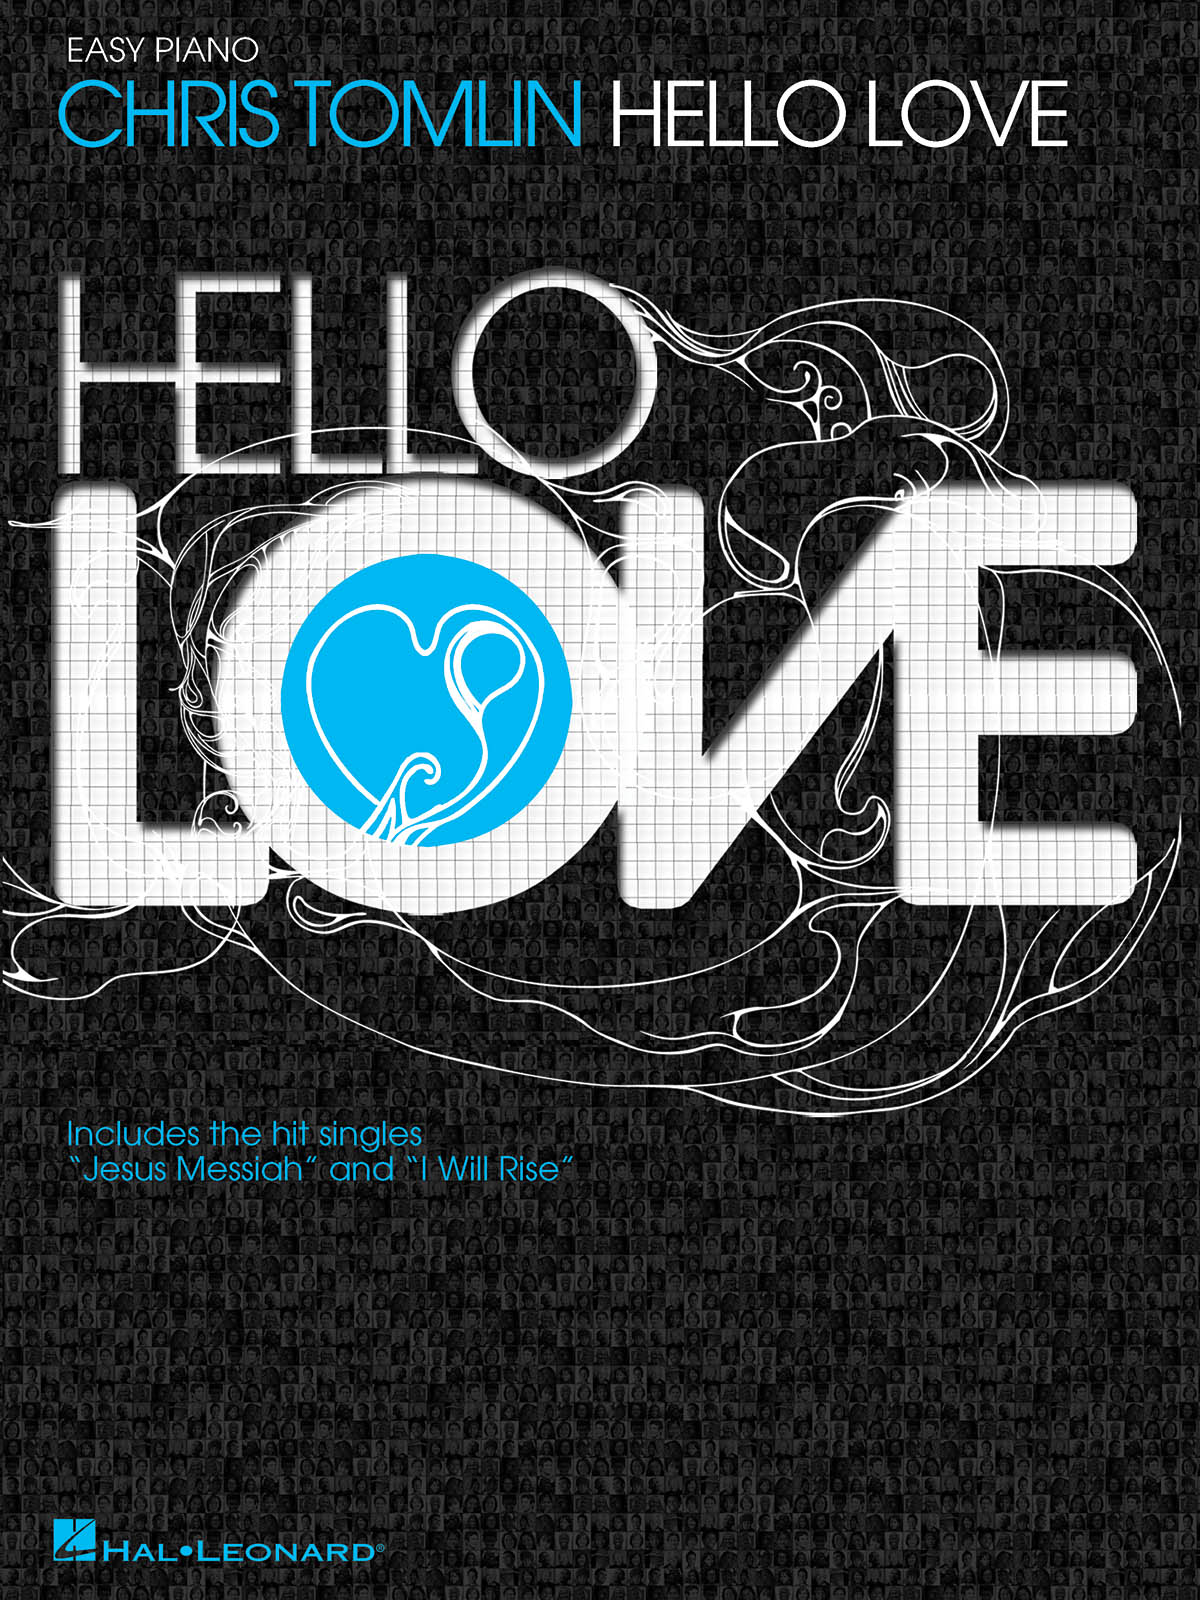 Chris Tomlin: Chris Tomlin: Hello Love: Easy Piano: Instrumental Album